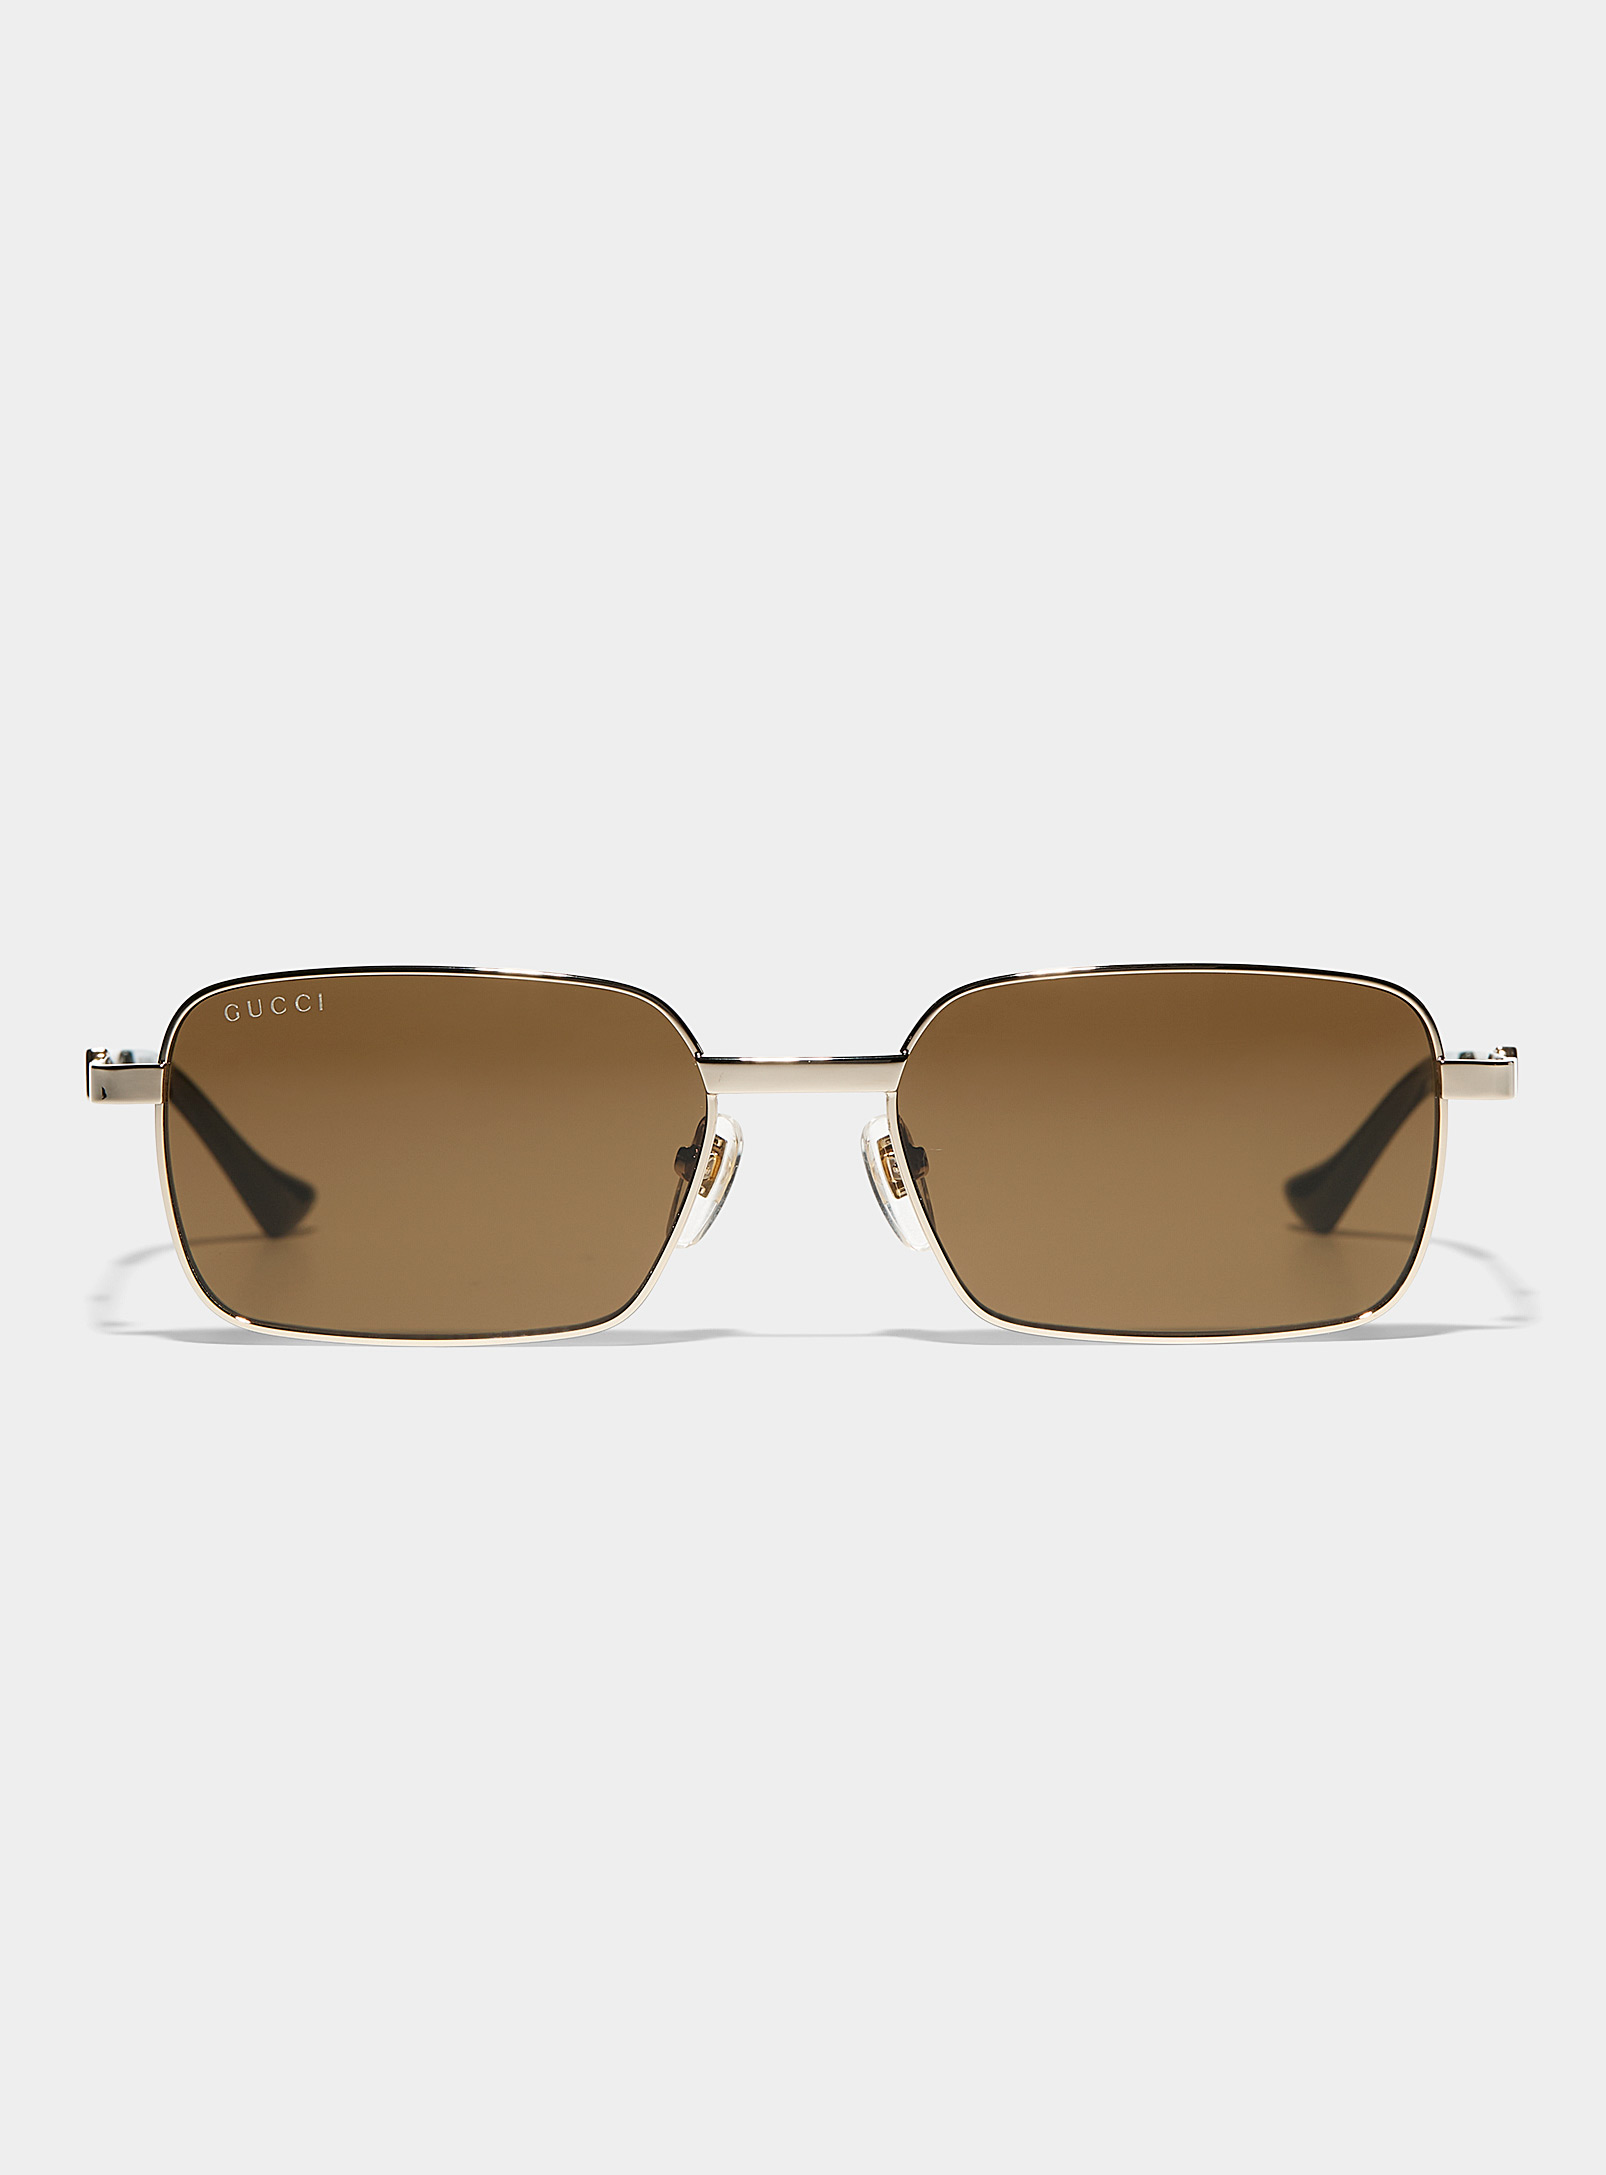 Gucci Sleek Metallic Sunglasses In Gold